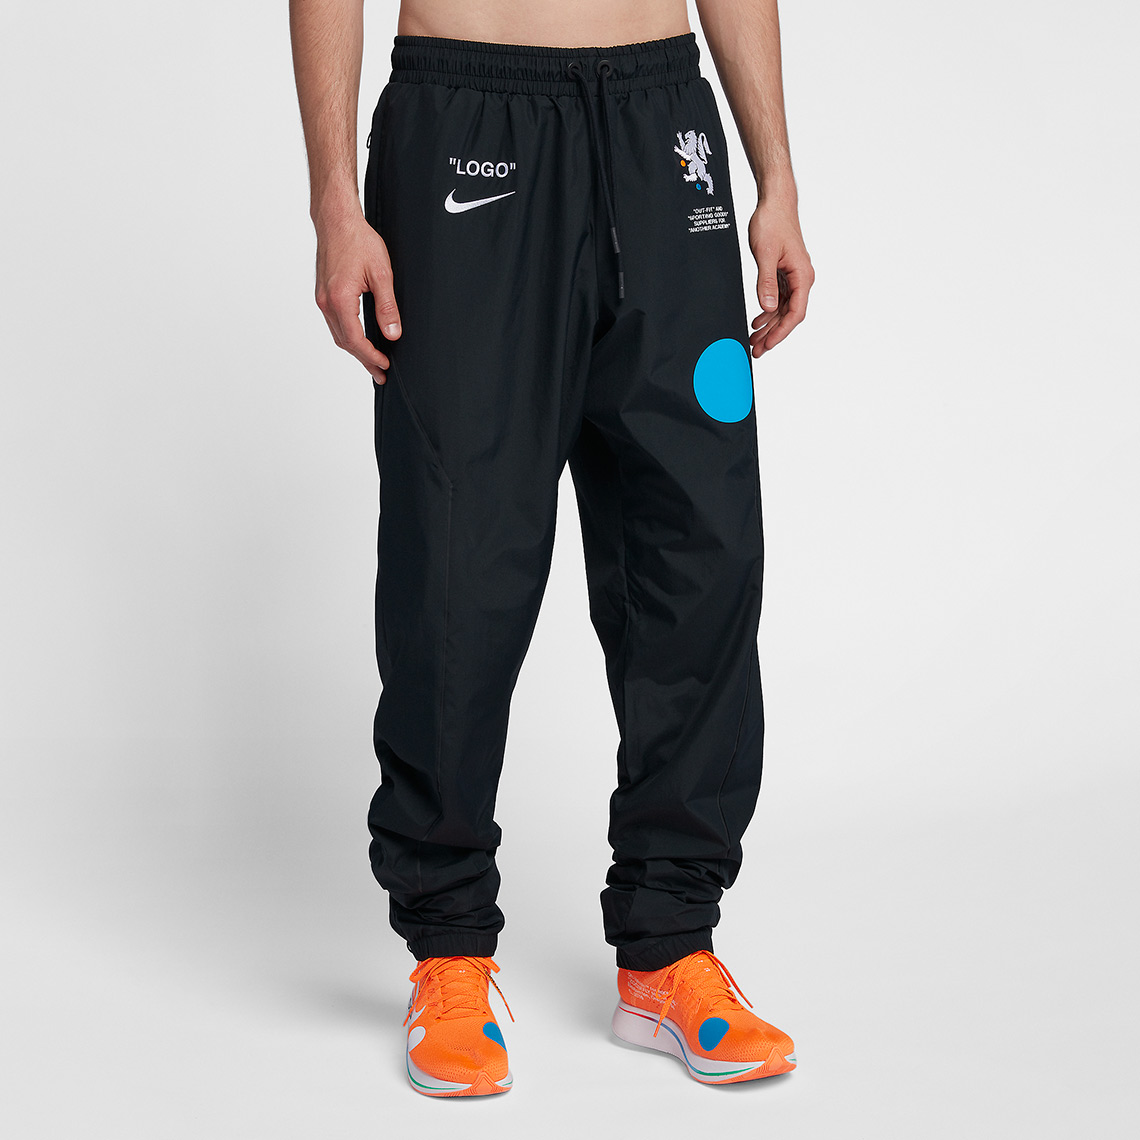 Off White Nike Soccer Pants Aa3299 010 1